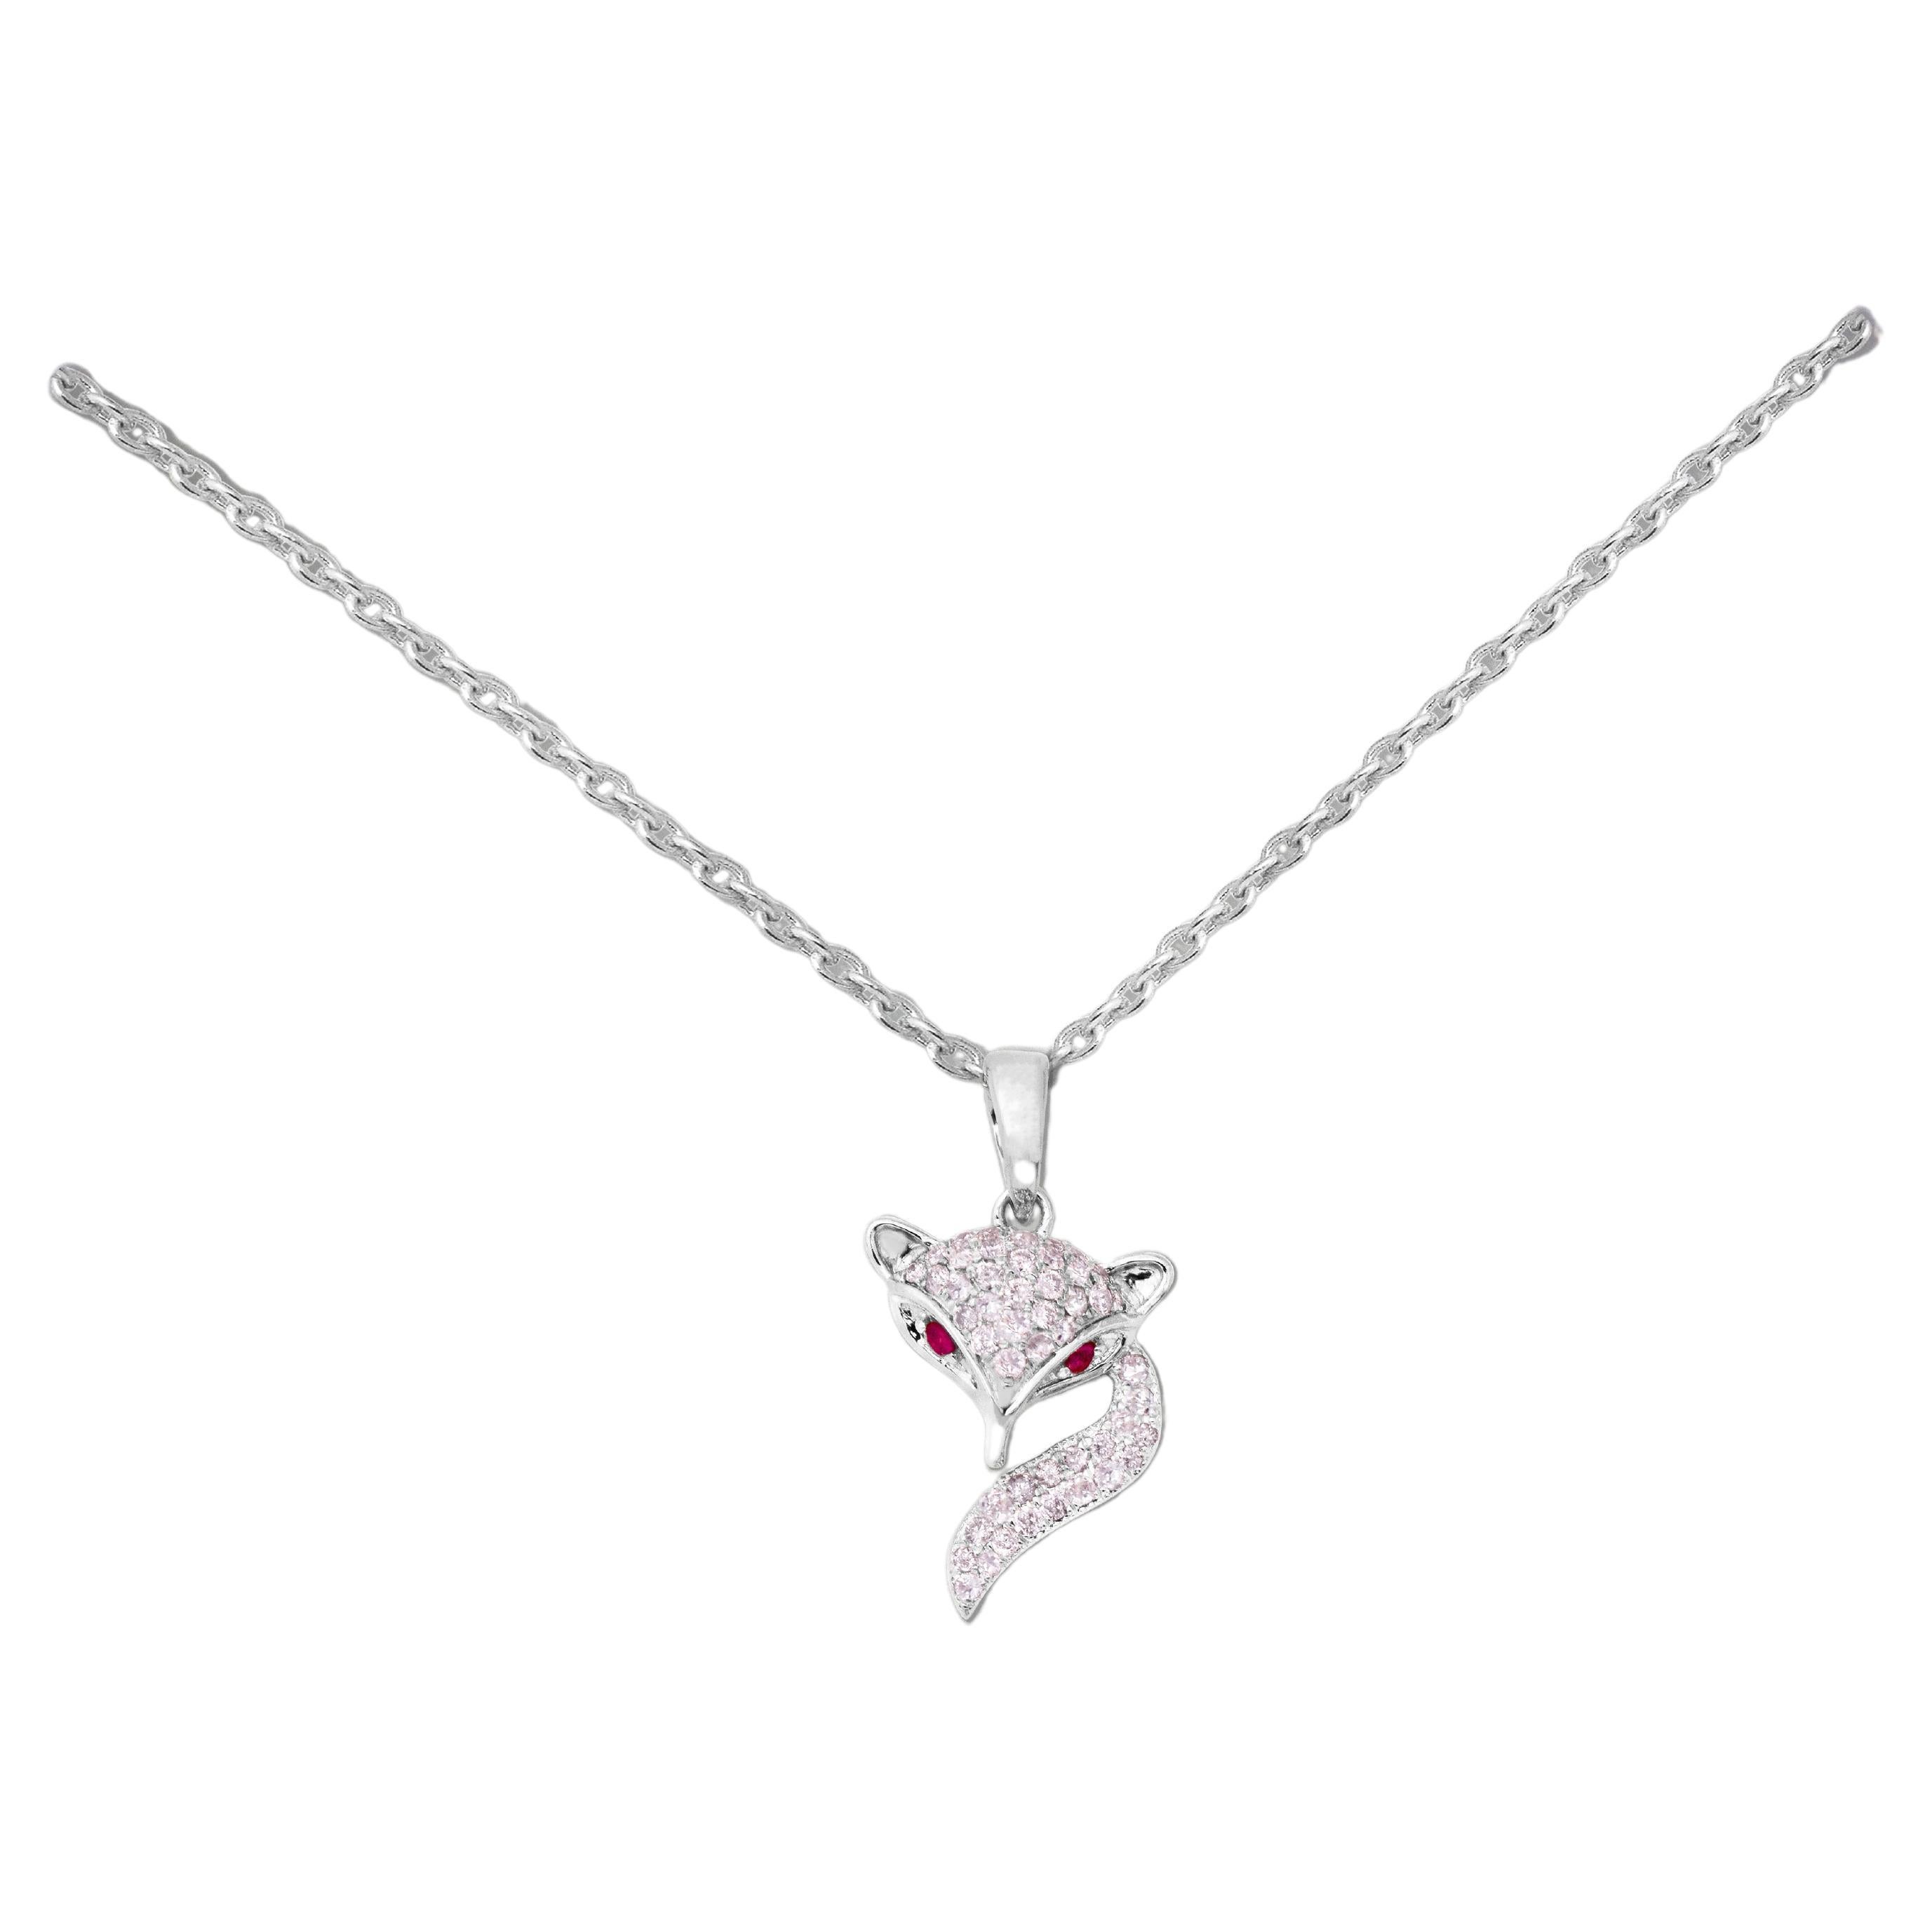 IGI 14K 0.36 ct Natural Pink Diamonds Fox Design Pendant Necklace